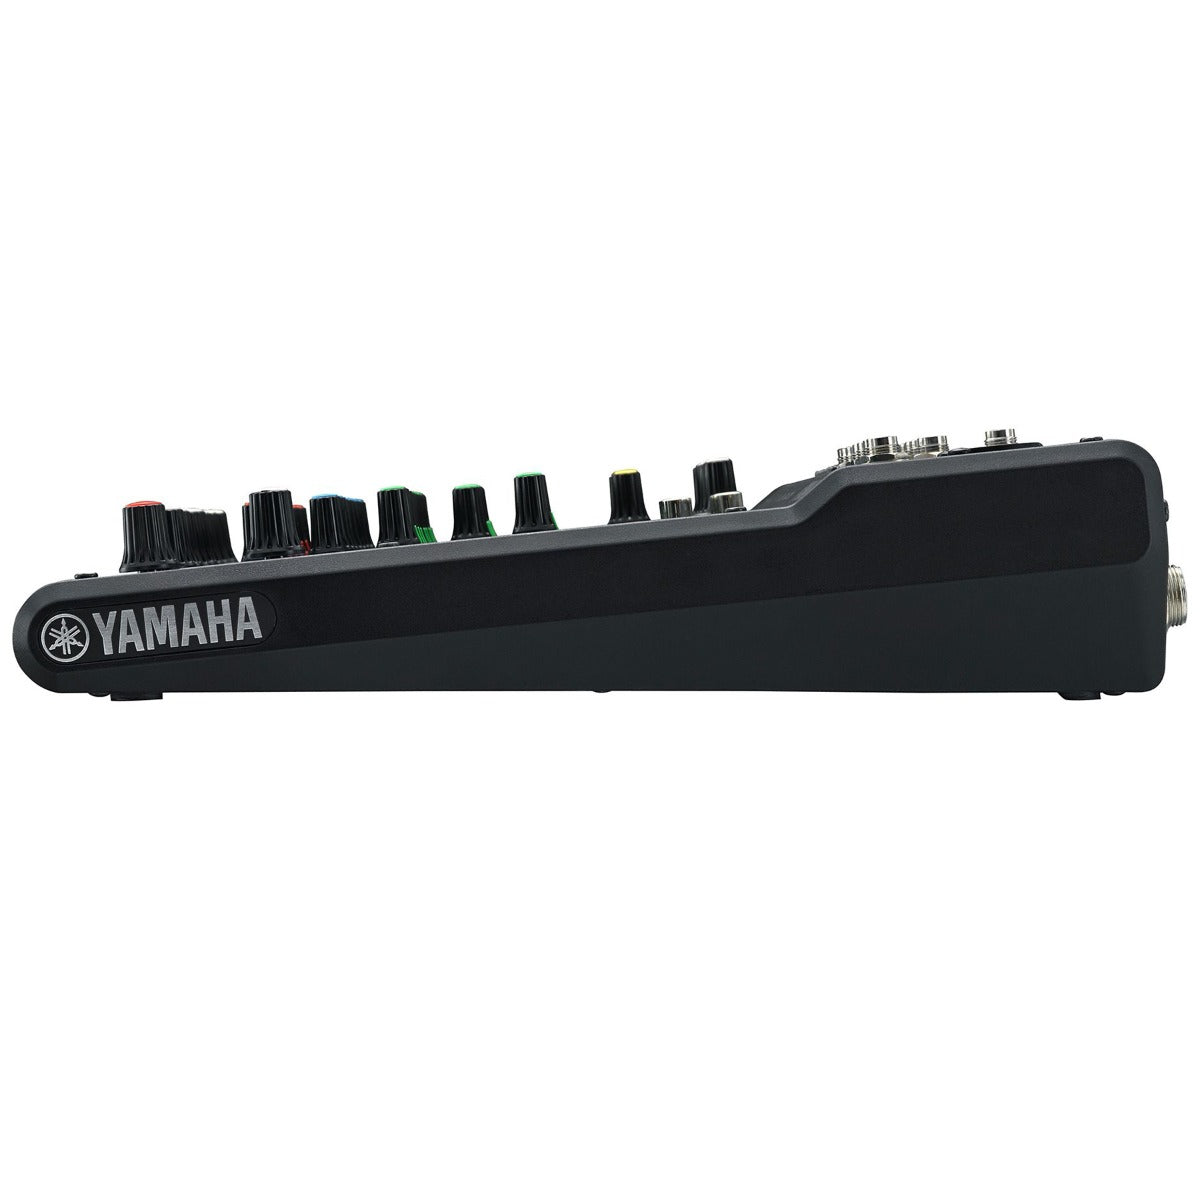 Yamaha MG10 10-Channel Compact Stereo Mixer - View 4